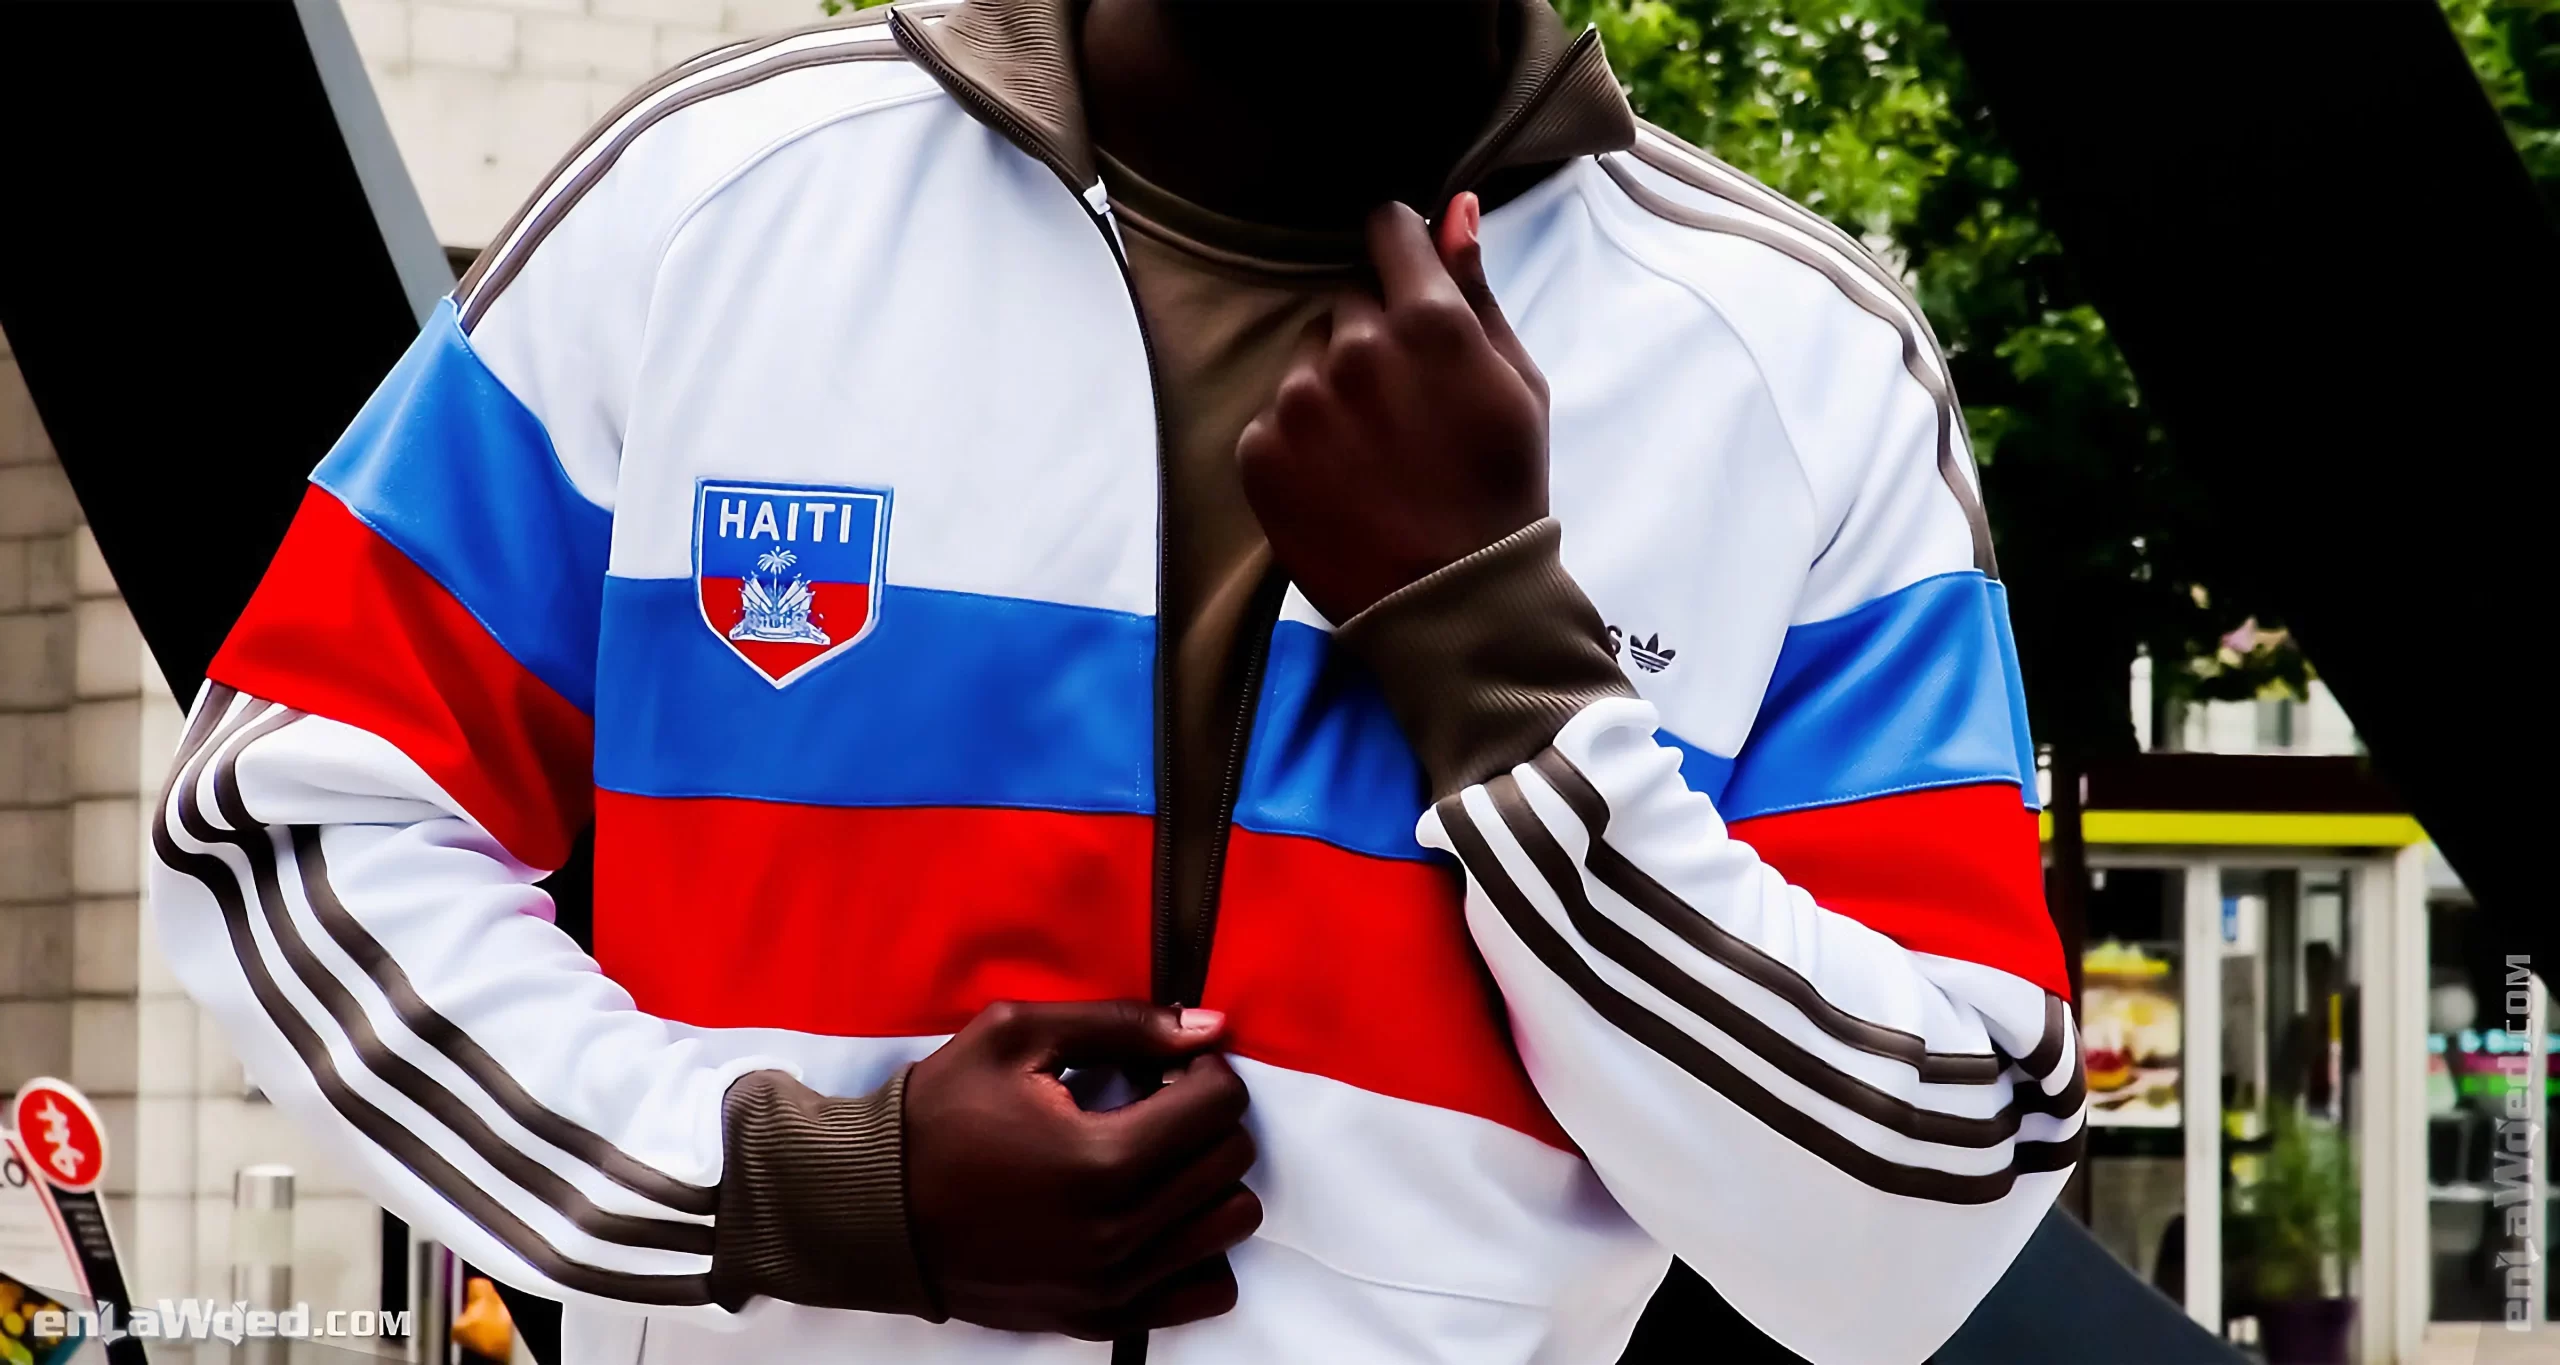 Men’s 2010 Haiti Track Top by Adidas Originals: Radiant (EnLawded.com file #lmchk90069ip2y121750kg9st)